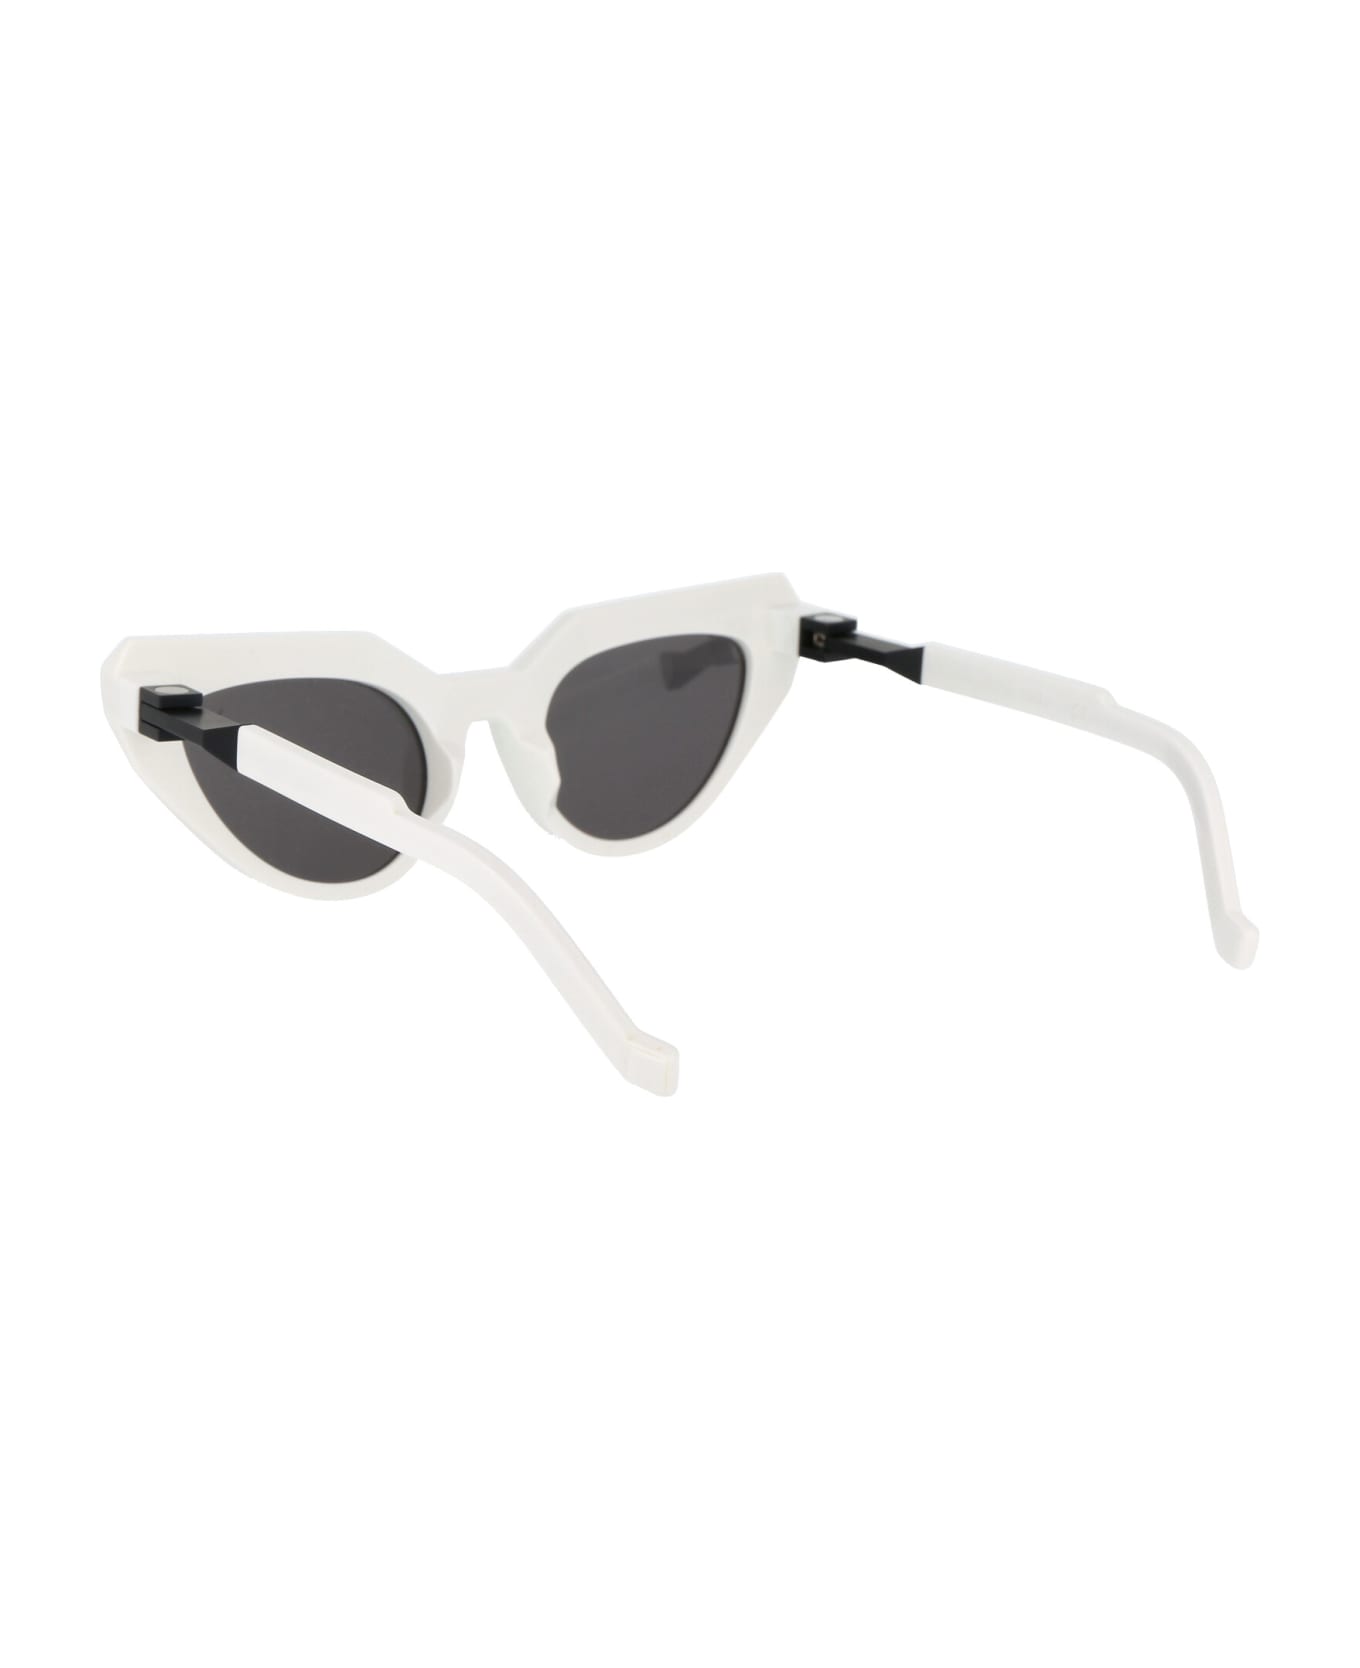 VAVA Bl0028 Sunglasses HANAH - WHITE|BLACK FLEX HINGES|BLACK LENSES